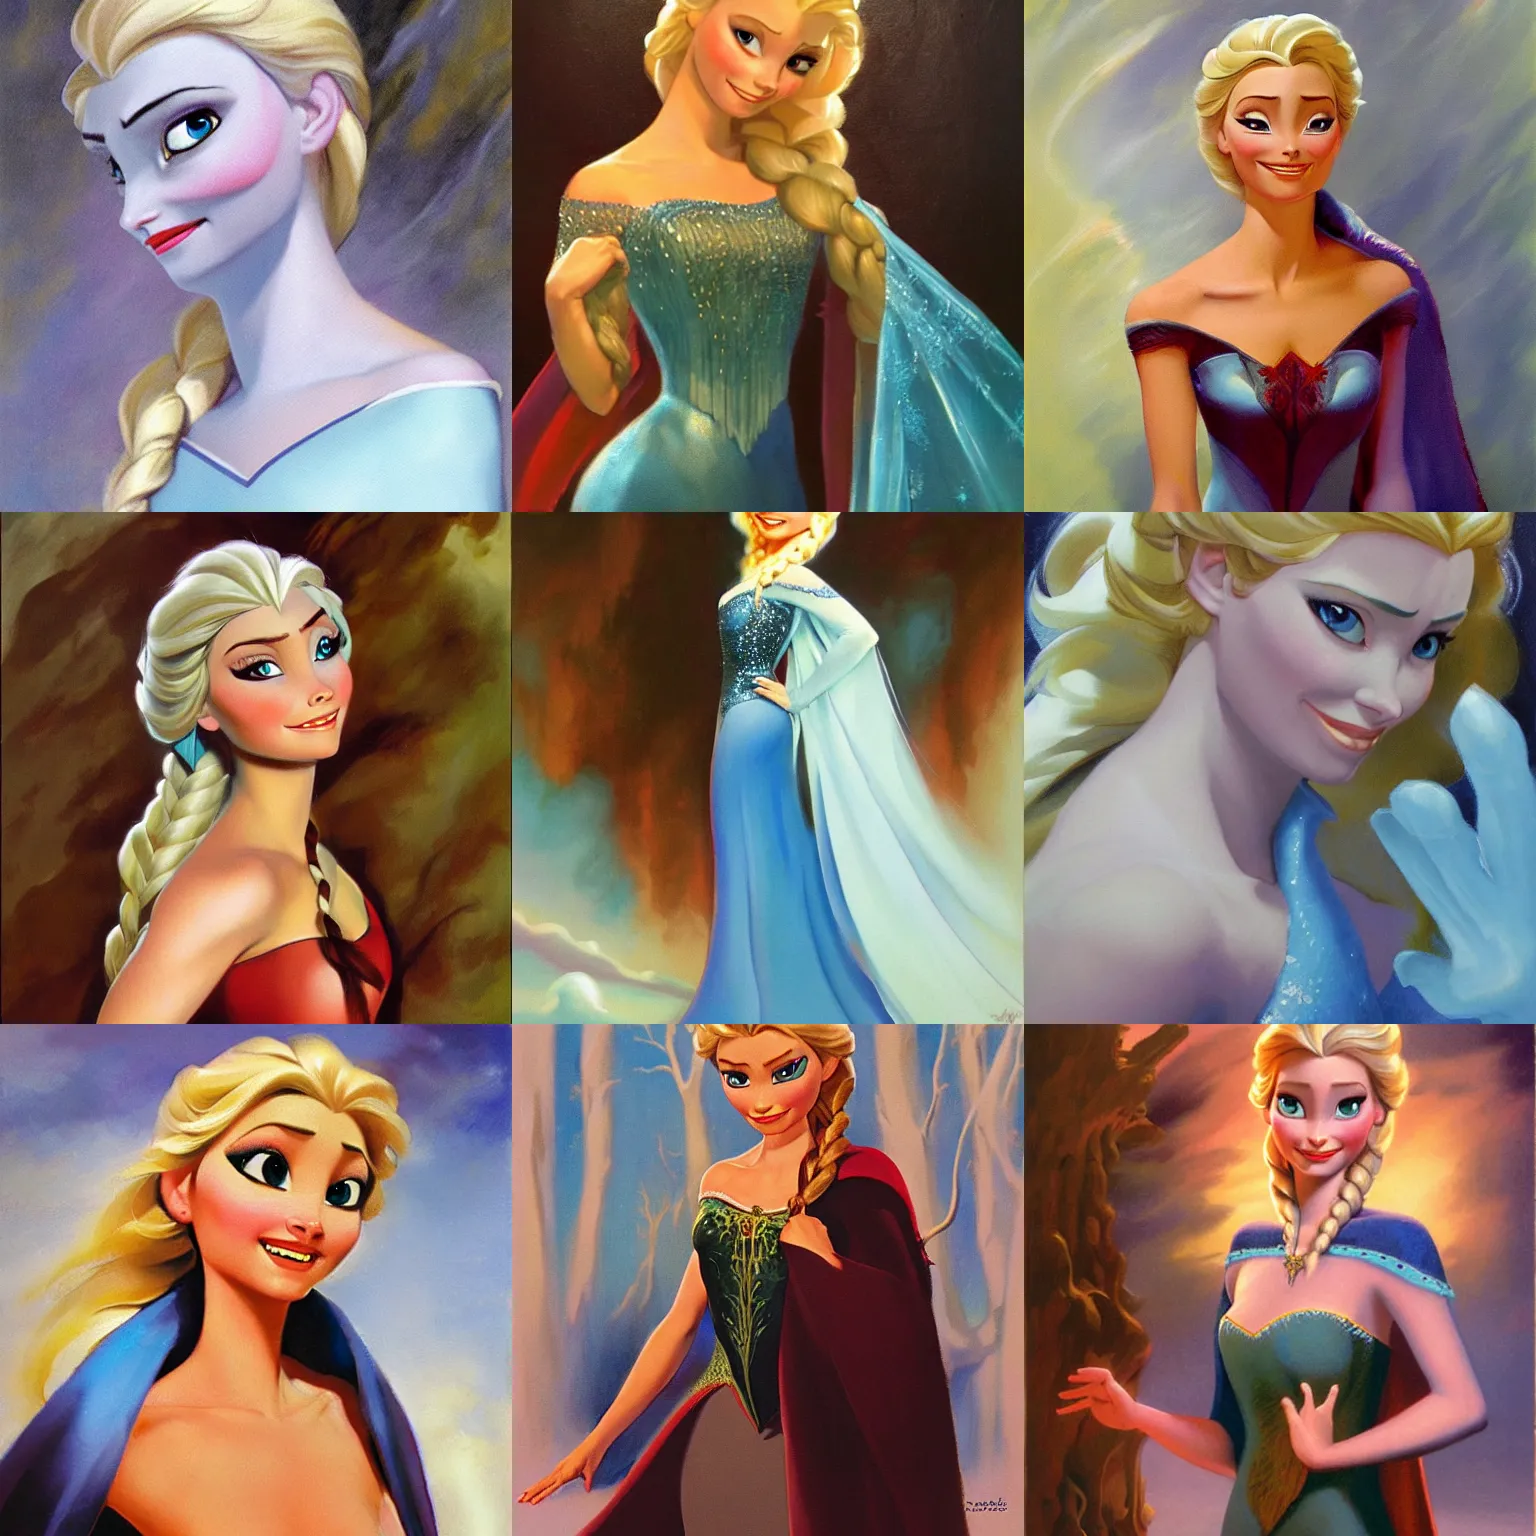 Prompt: Elsa from Frozen, oil painting by Boris Vallejo, Frank Frazetta